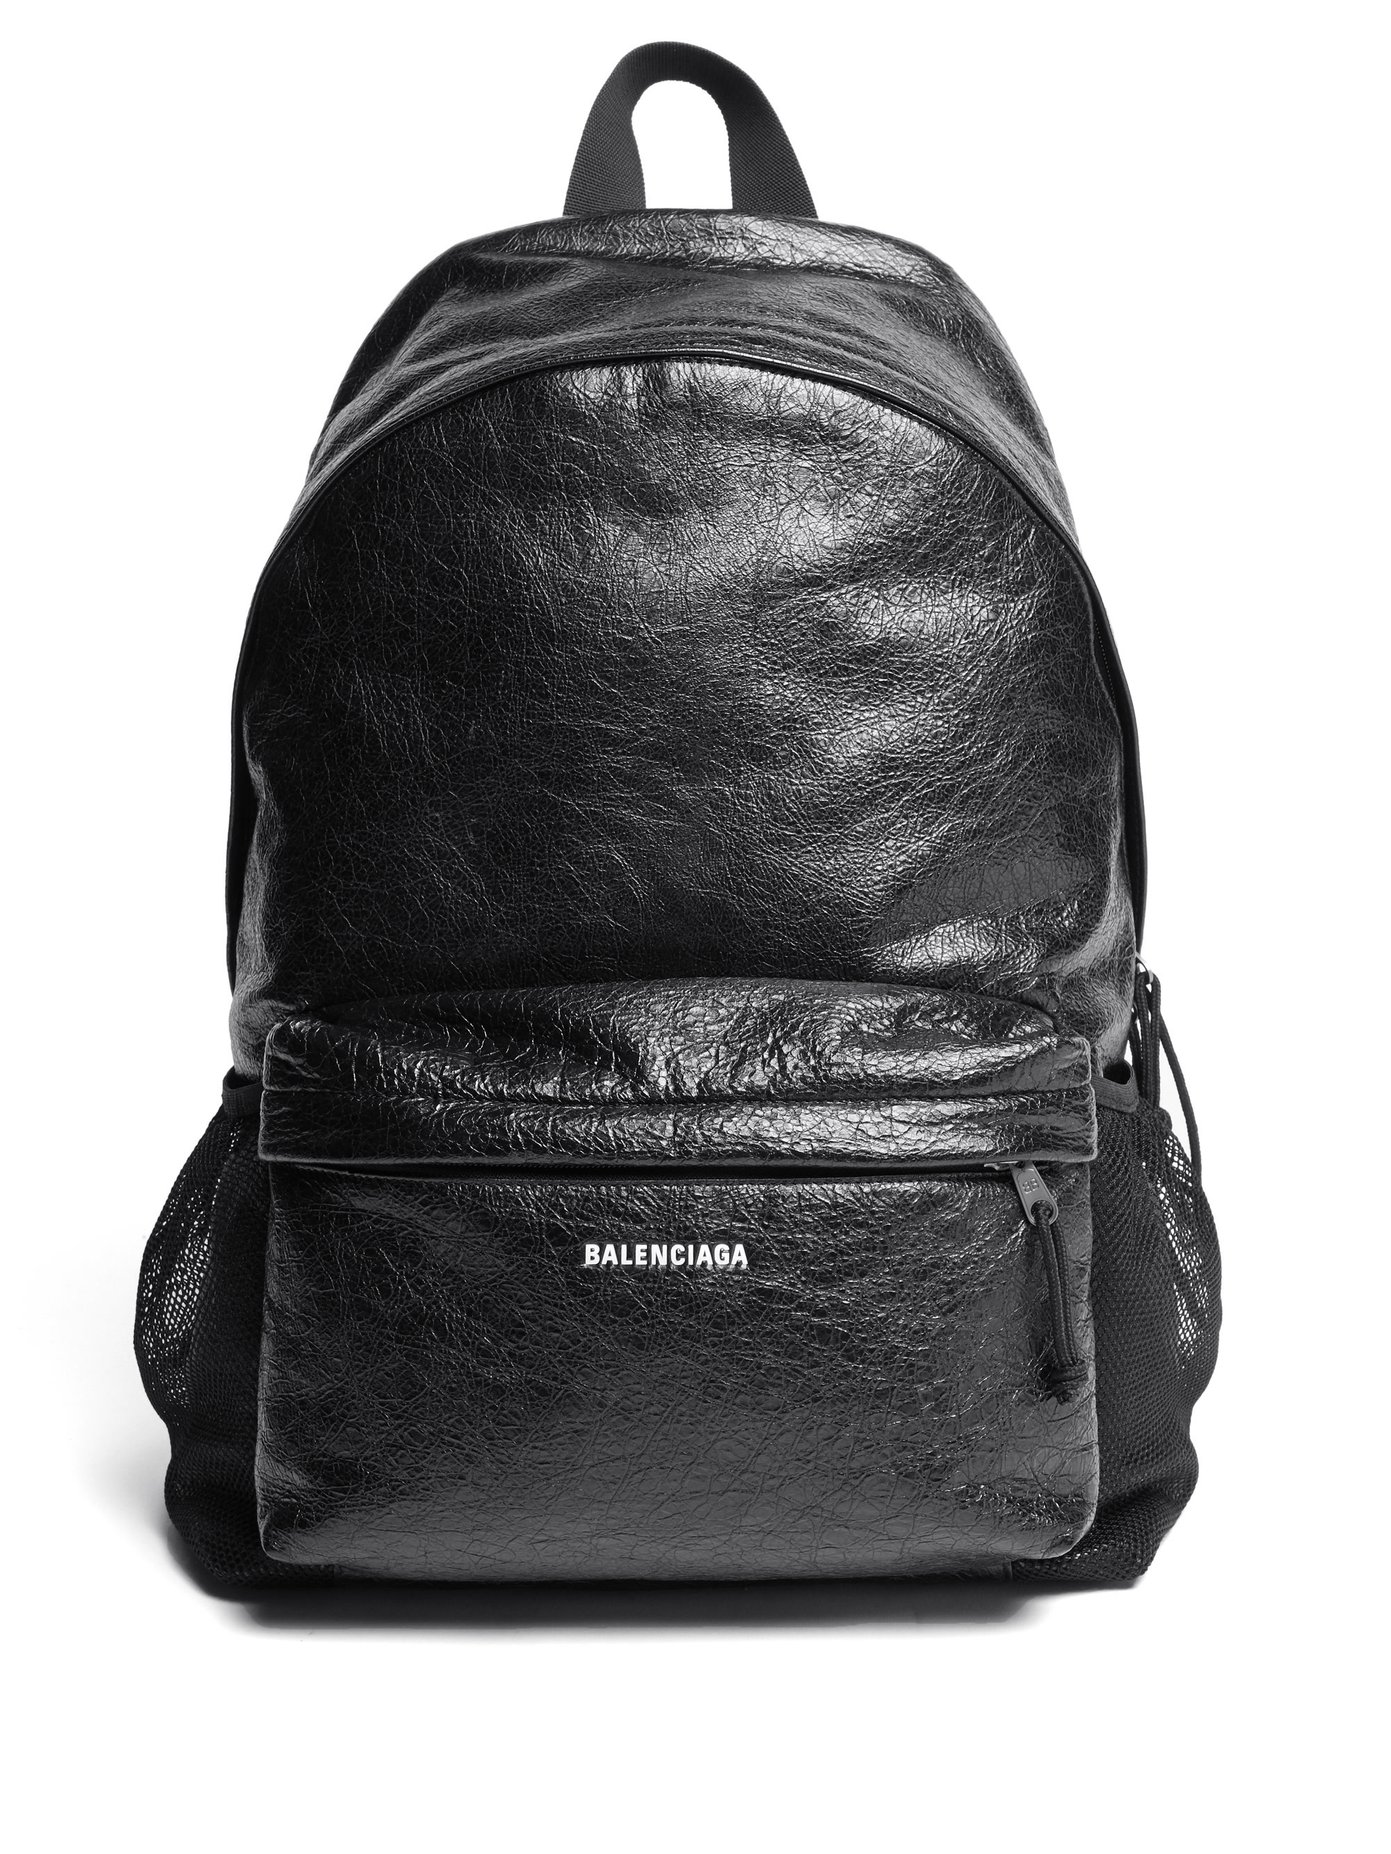 balenciaga backpack leather